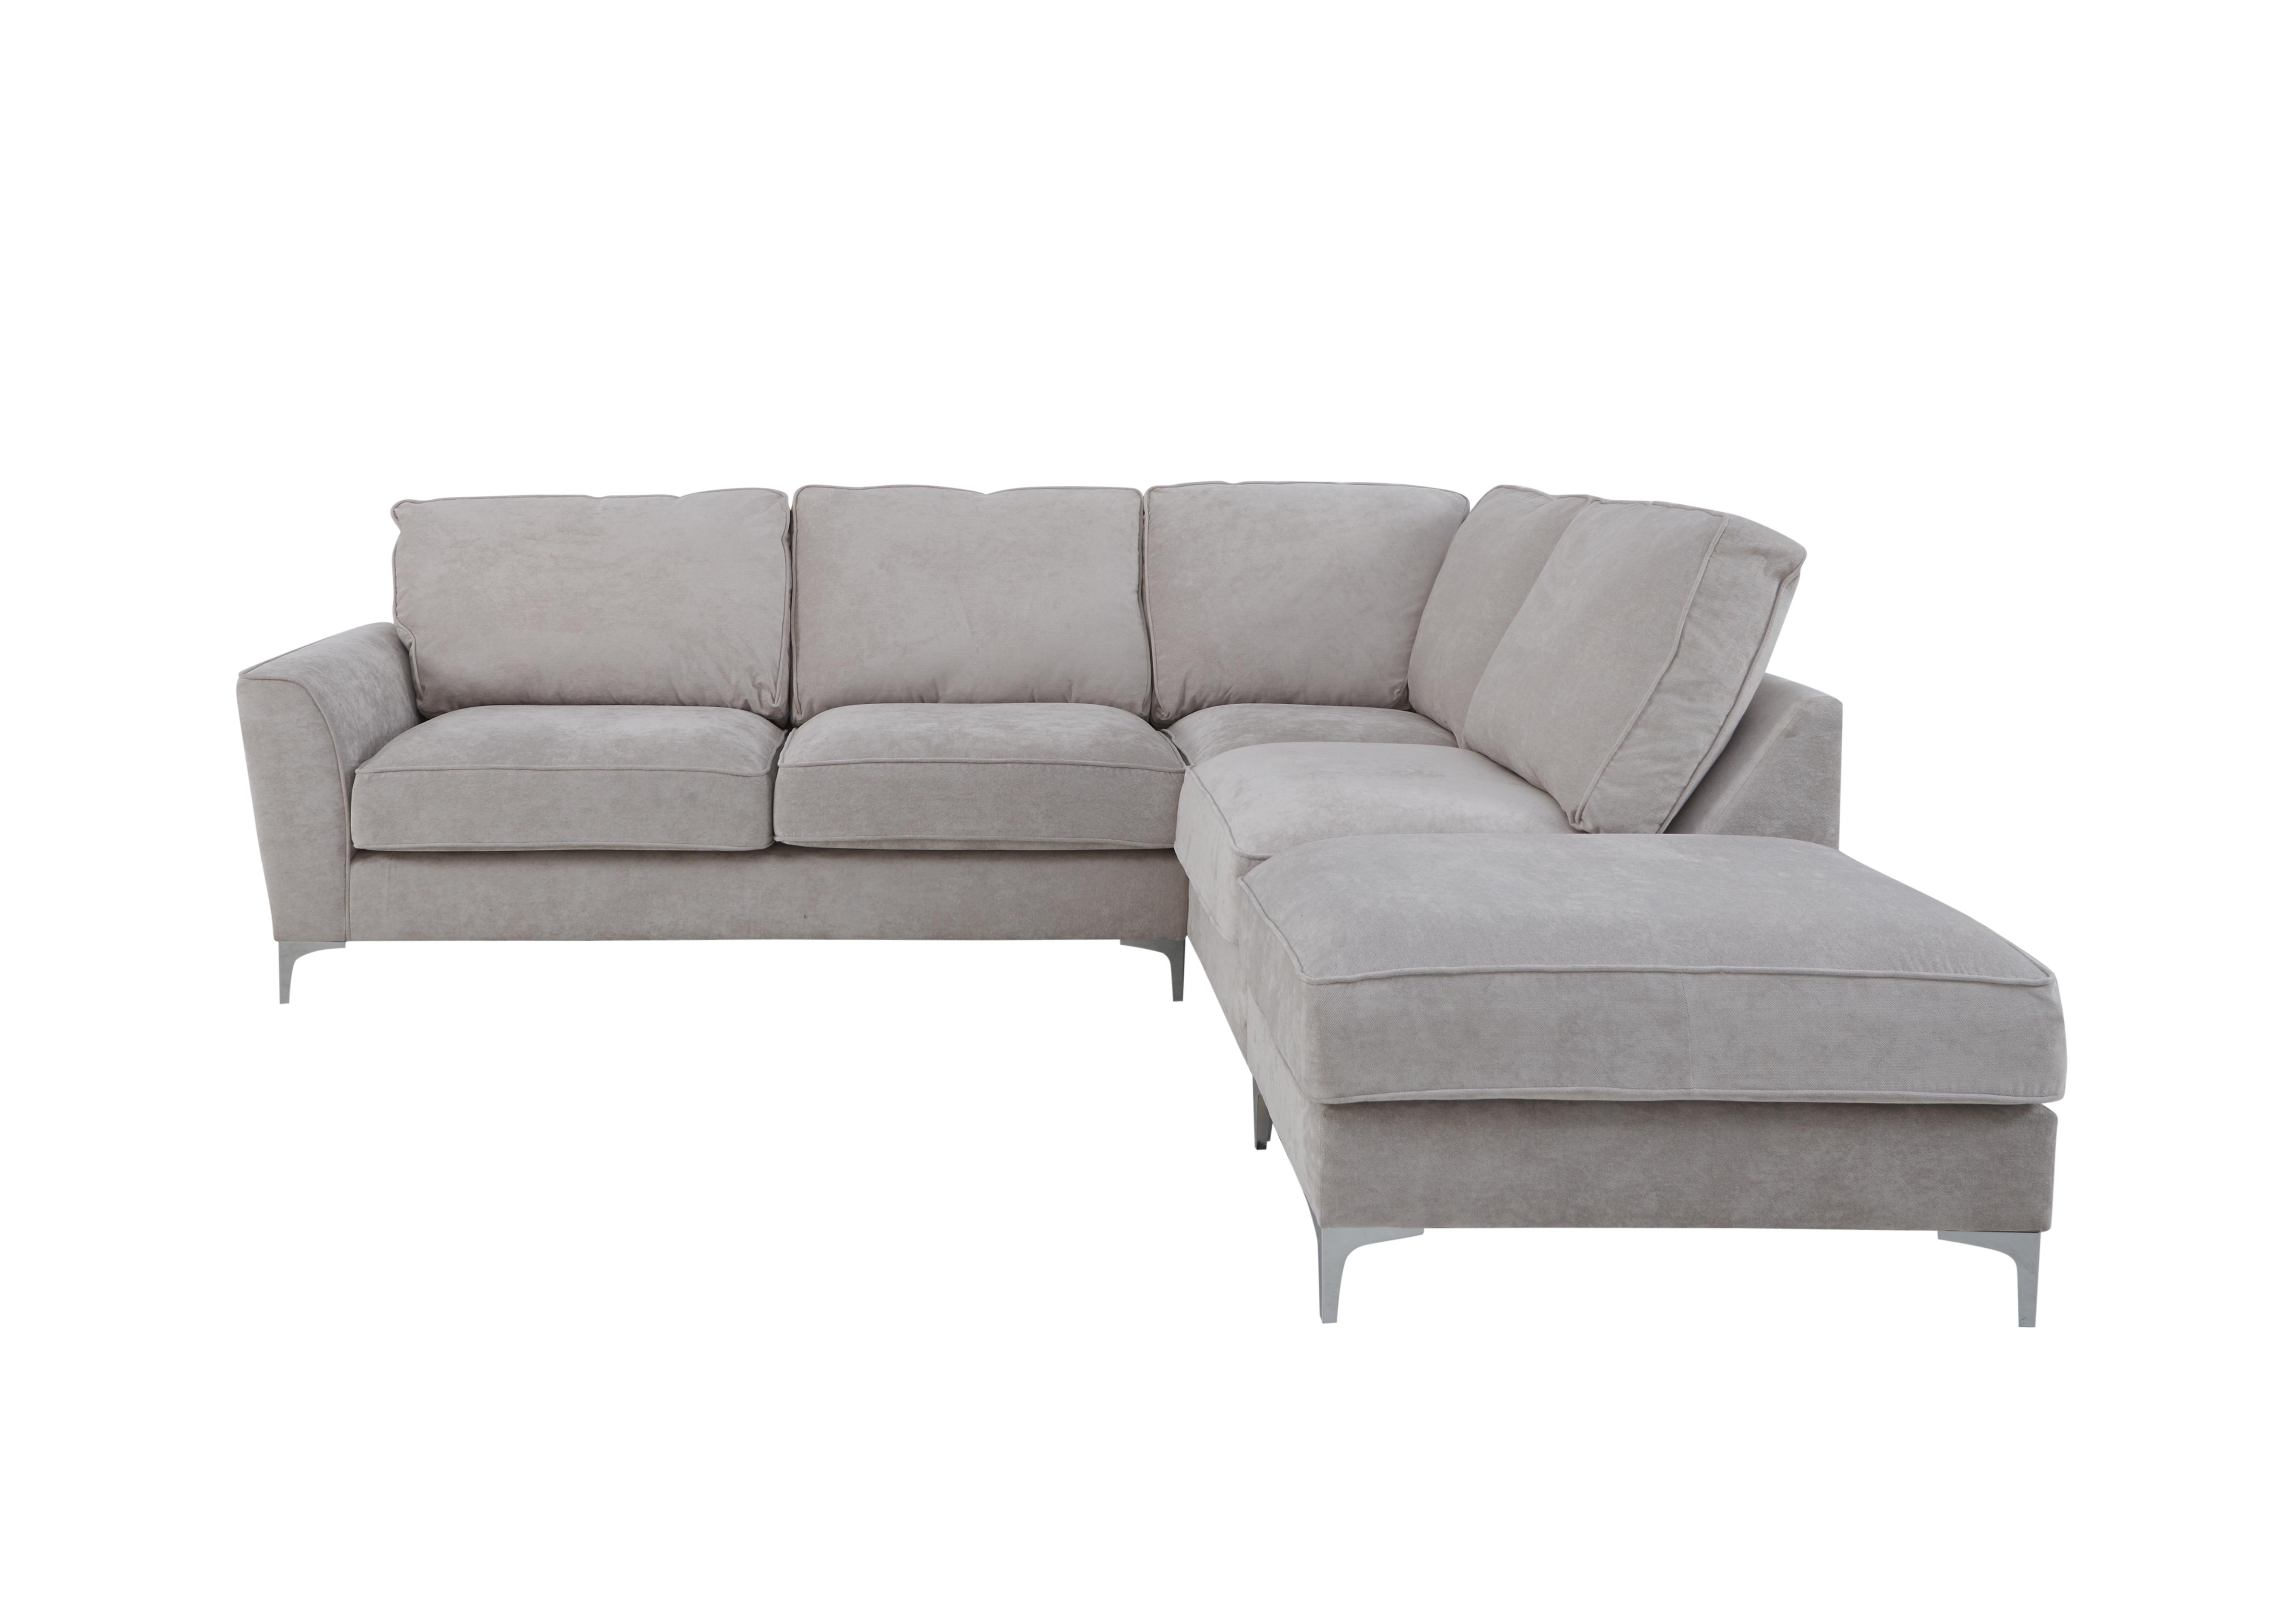 Legend Classic Back Fabric Corner Sofa in Kingston Silver on Furniture Village